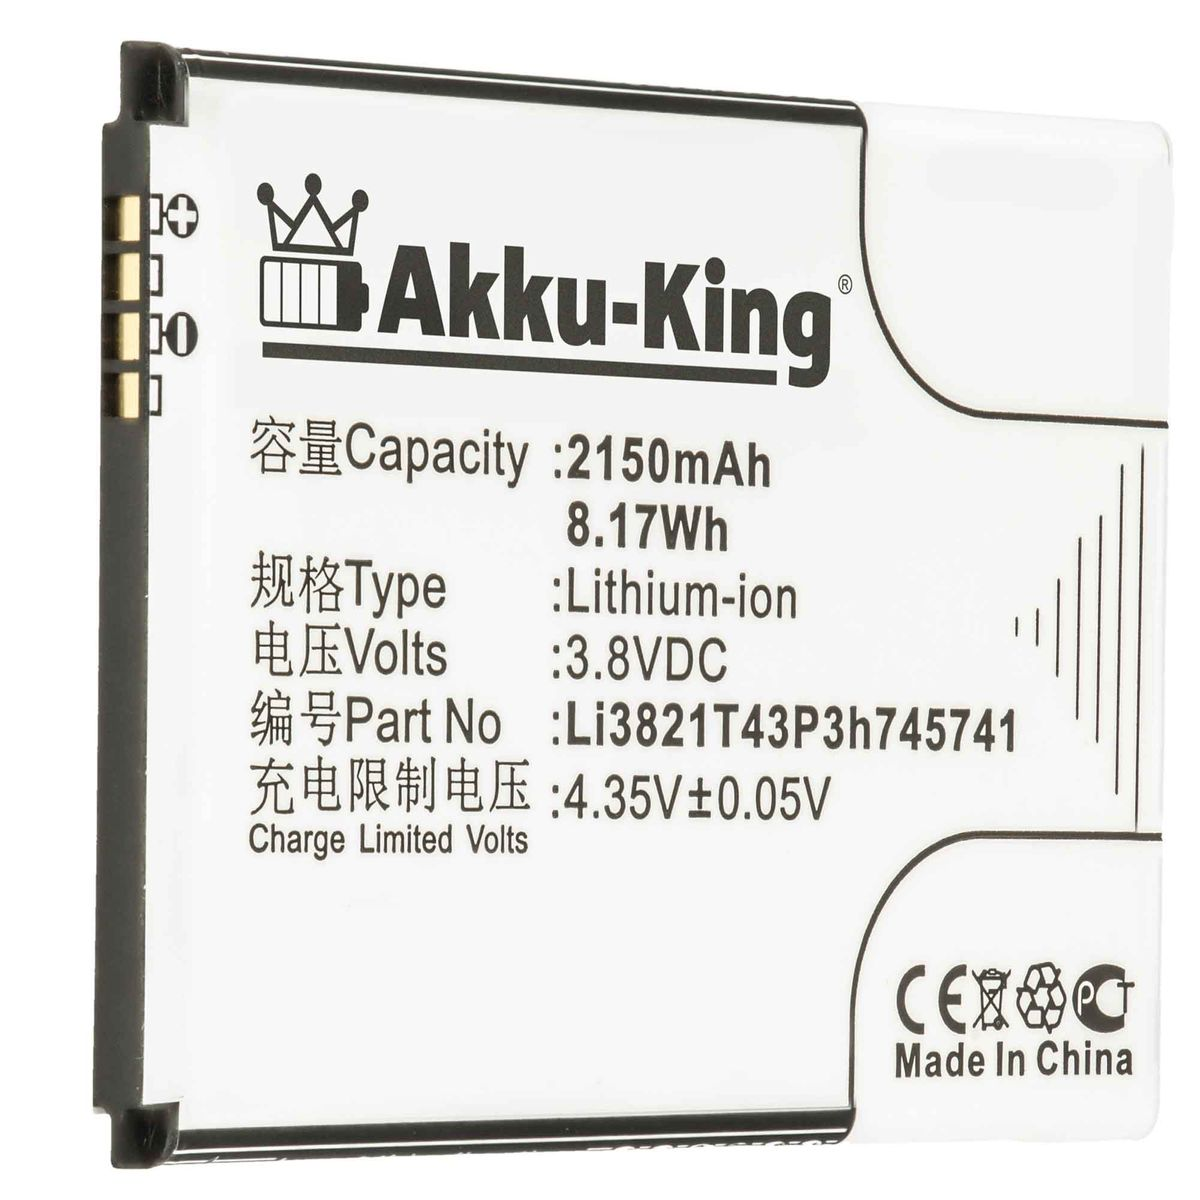 AKKU-KING Li-Ion Li3821T43P3h745741 mit ZTE 2150mAh Volt, 3.8 kompatibel Akku Handy-Akku,